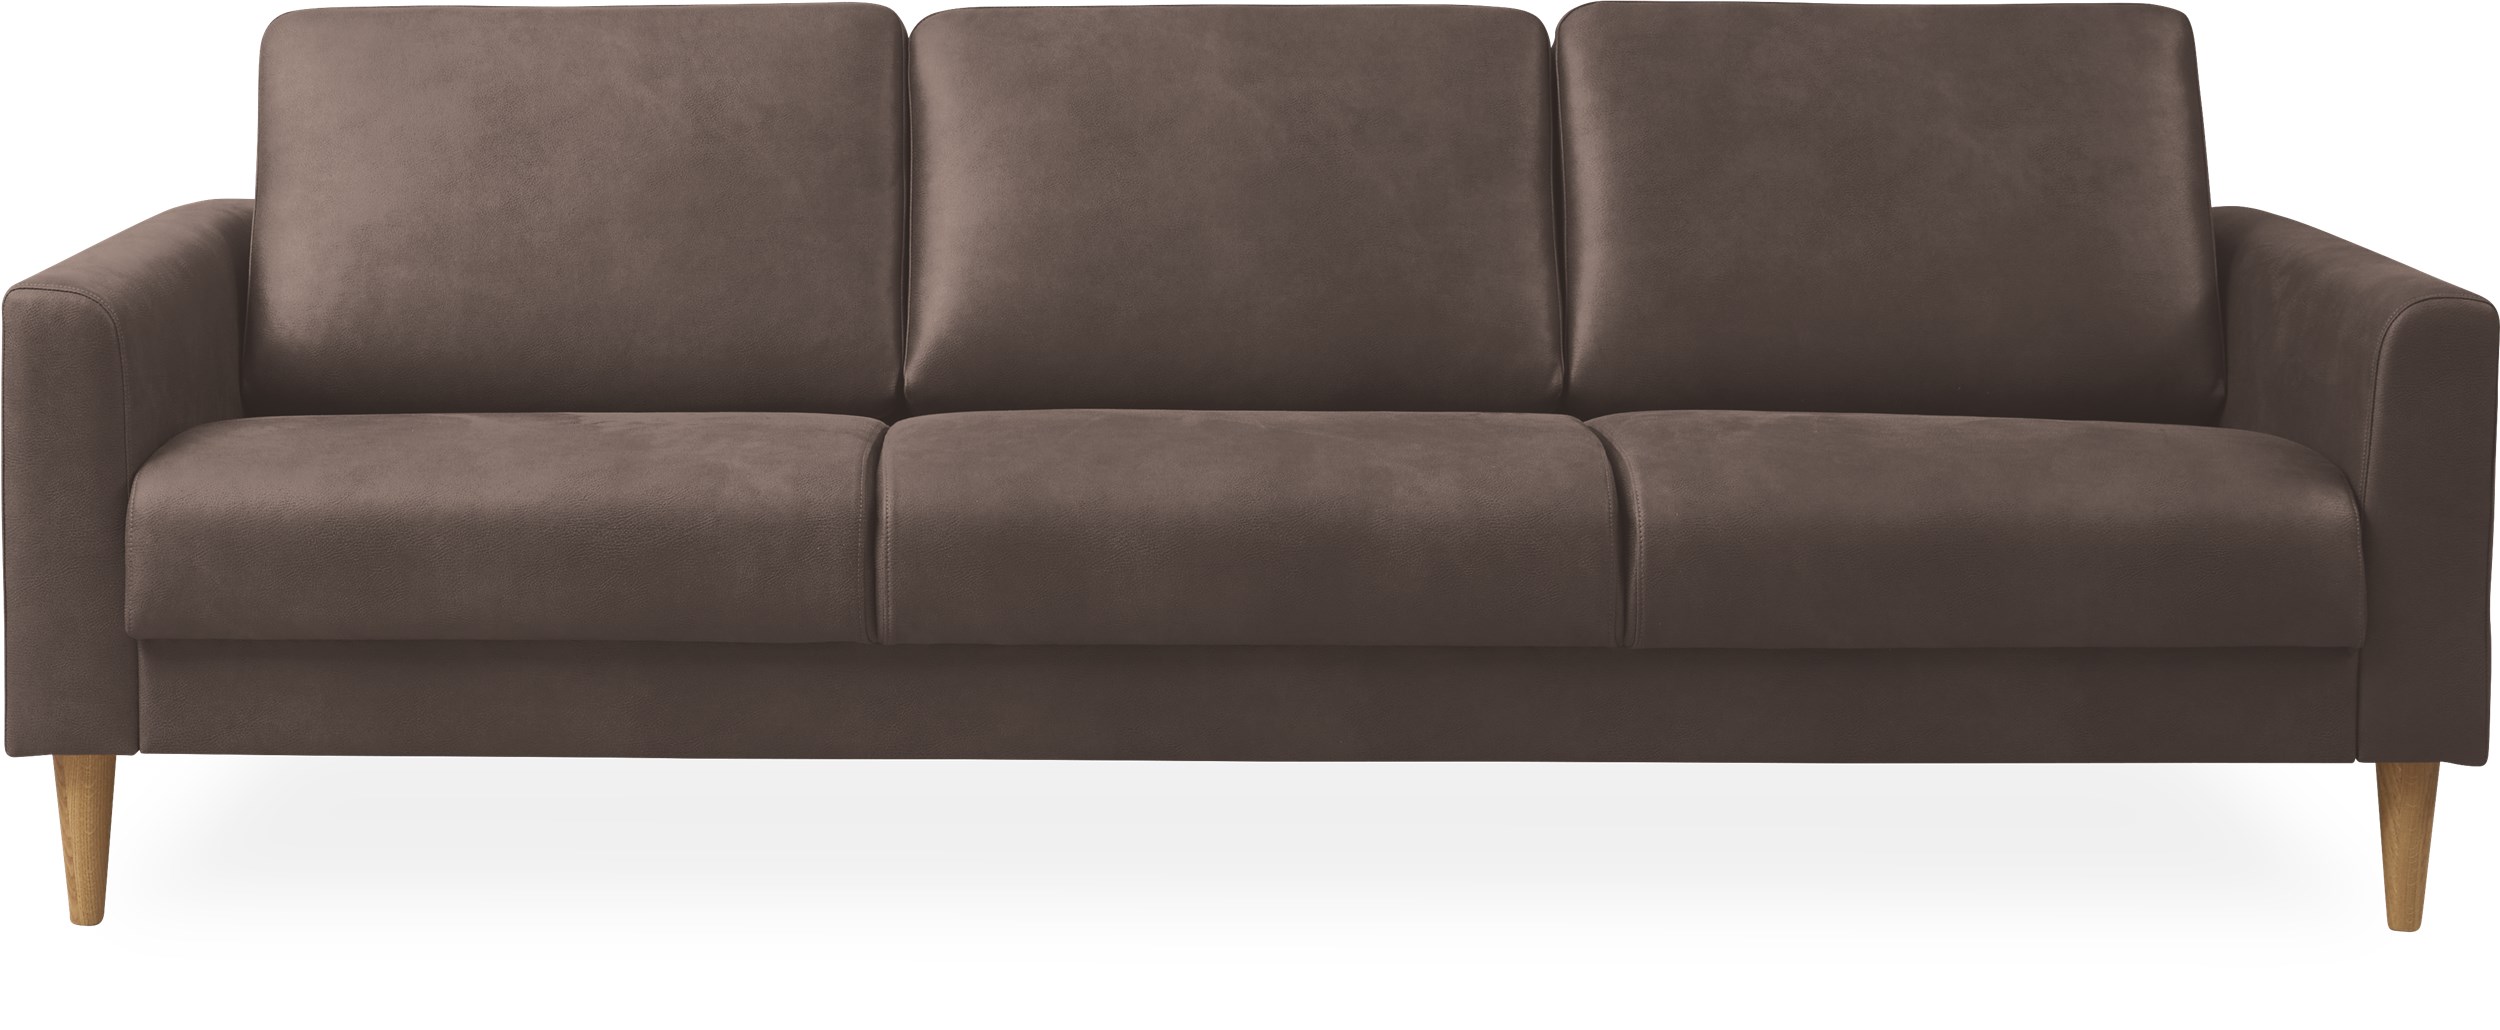 Linea 3 pers Sofa 